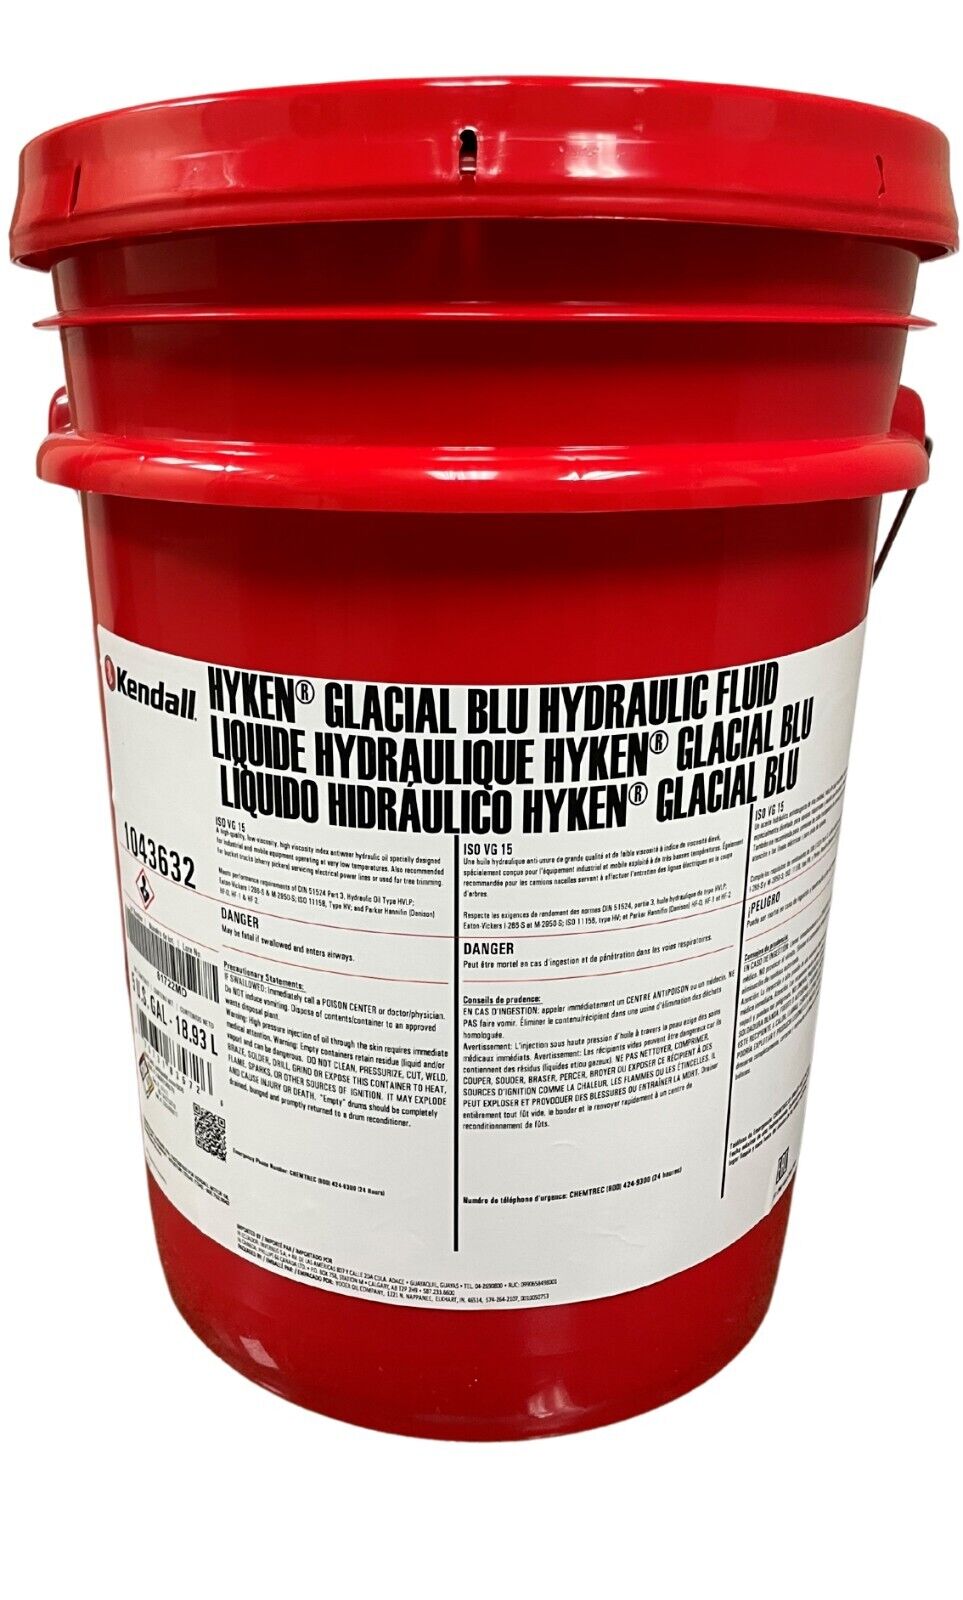 Kendall Hyken Glacial Blu Hydraulic Fluid; Dielectric Strength; 5 Gallon Pail